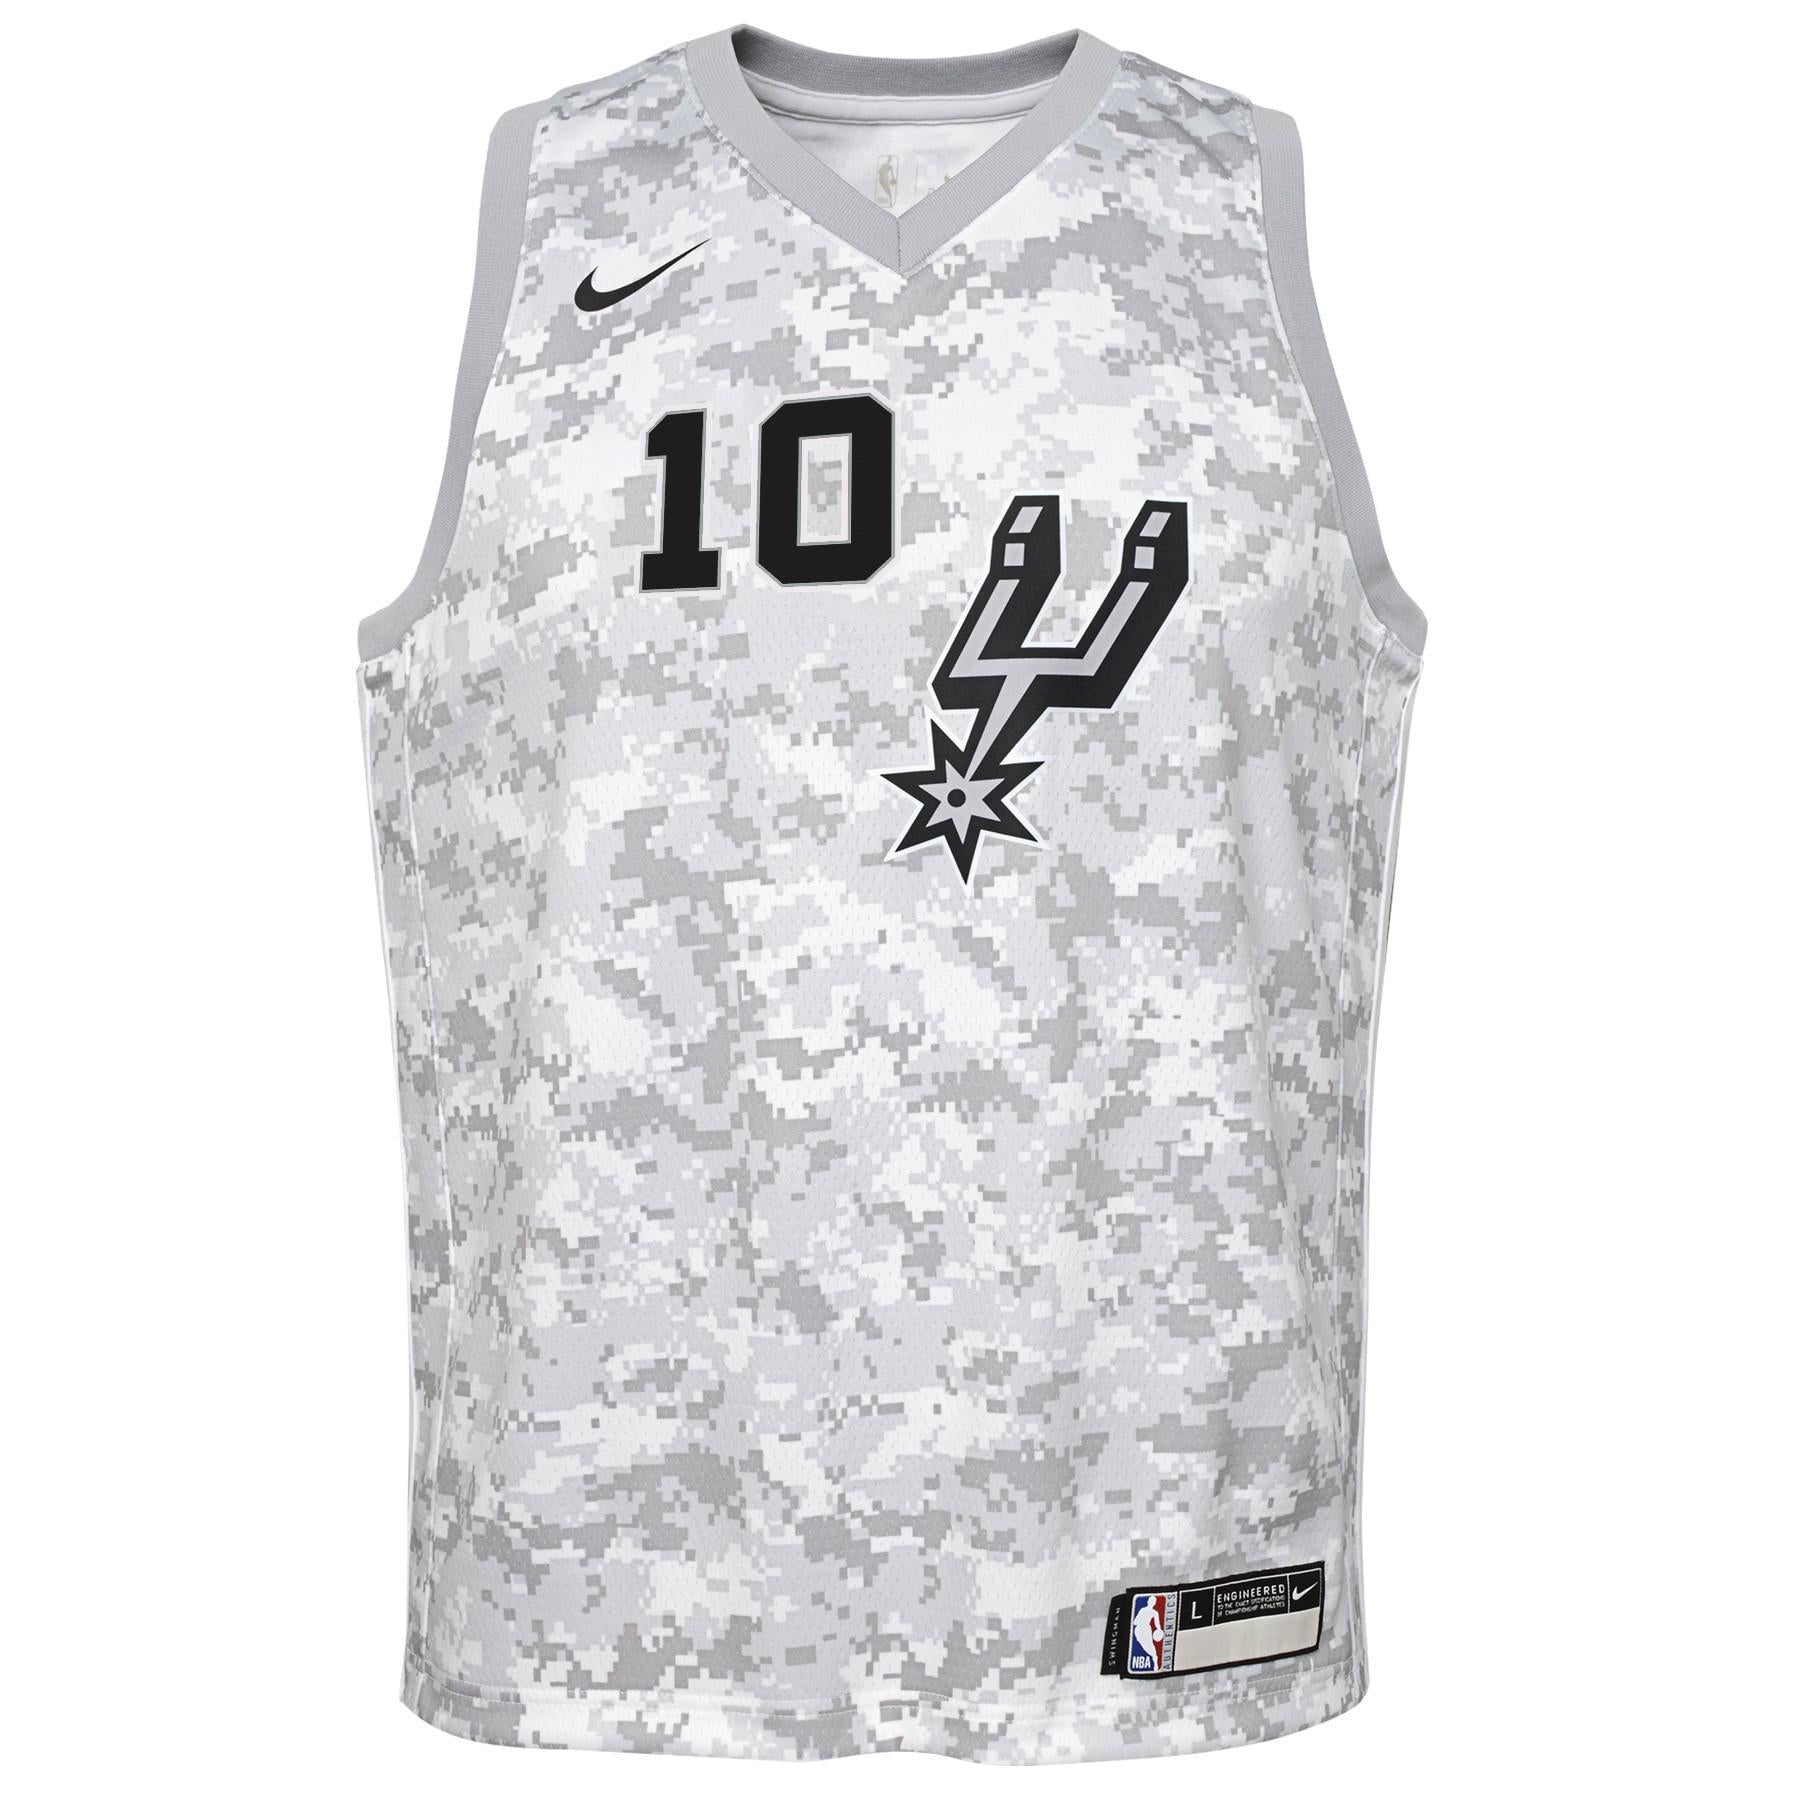 Nike, Shirts, San Antonio Spurs City Edition Jersey